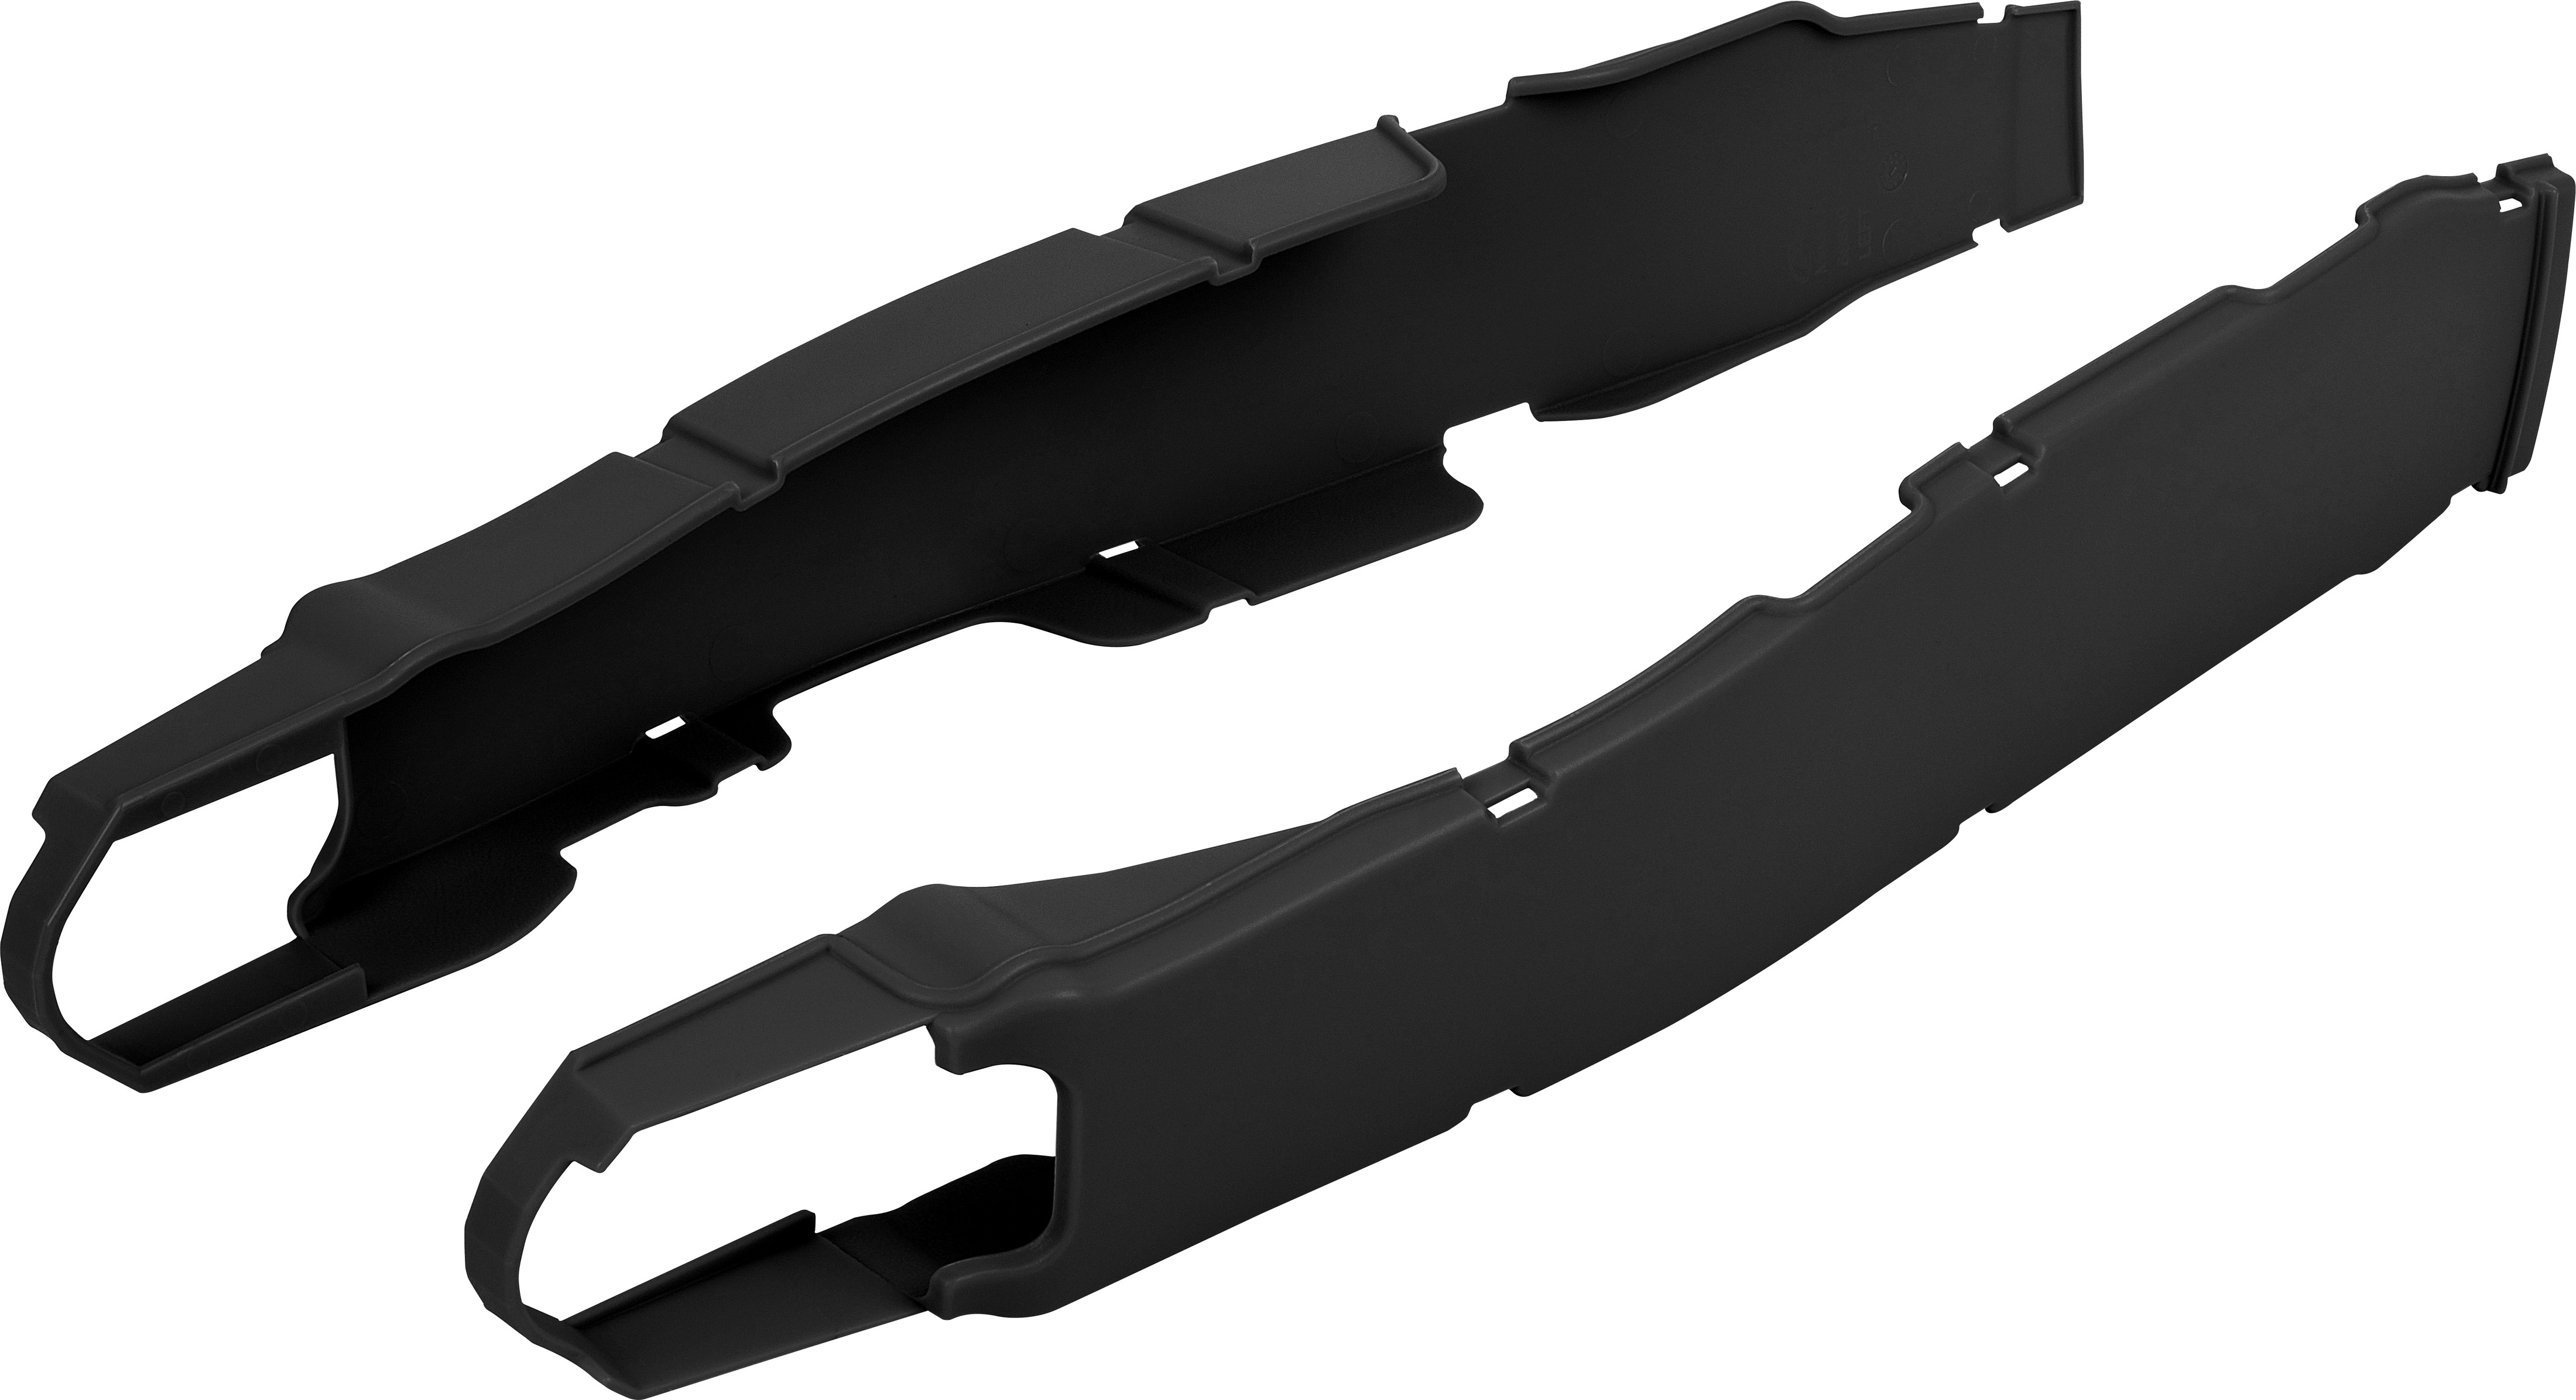 Black Swingarm Protectors - For 17-20 KX250 & 16-18 KX450 - Click Image to Close